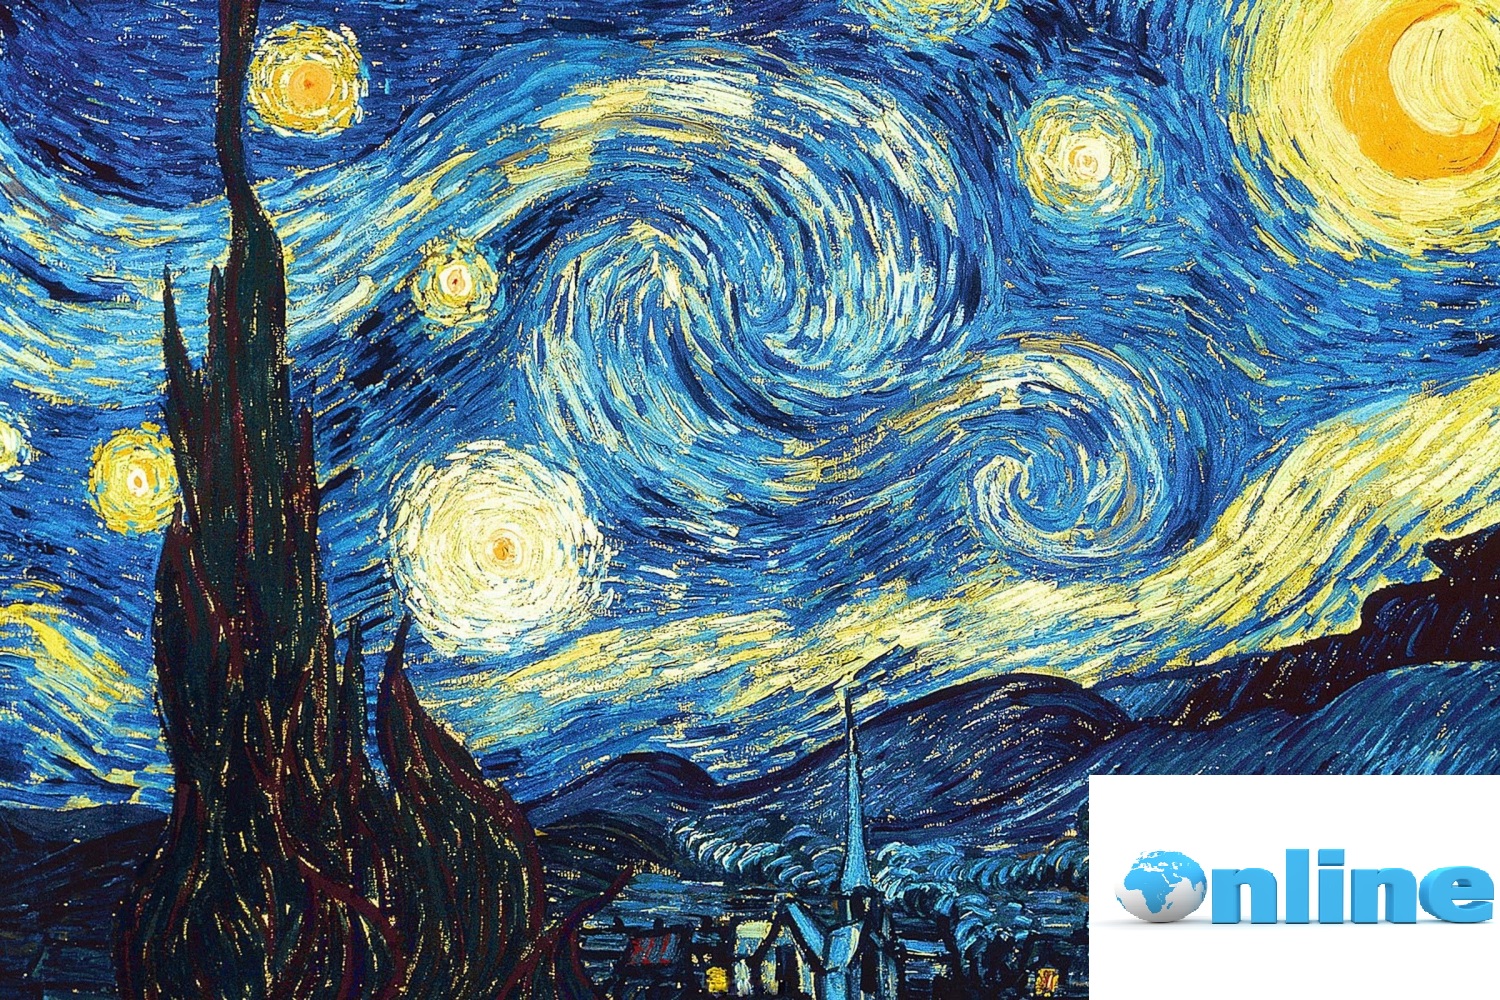 Online visit to the Van Gogh Museum, Netherlands